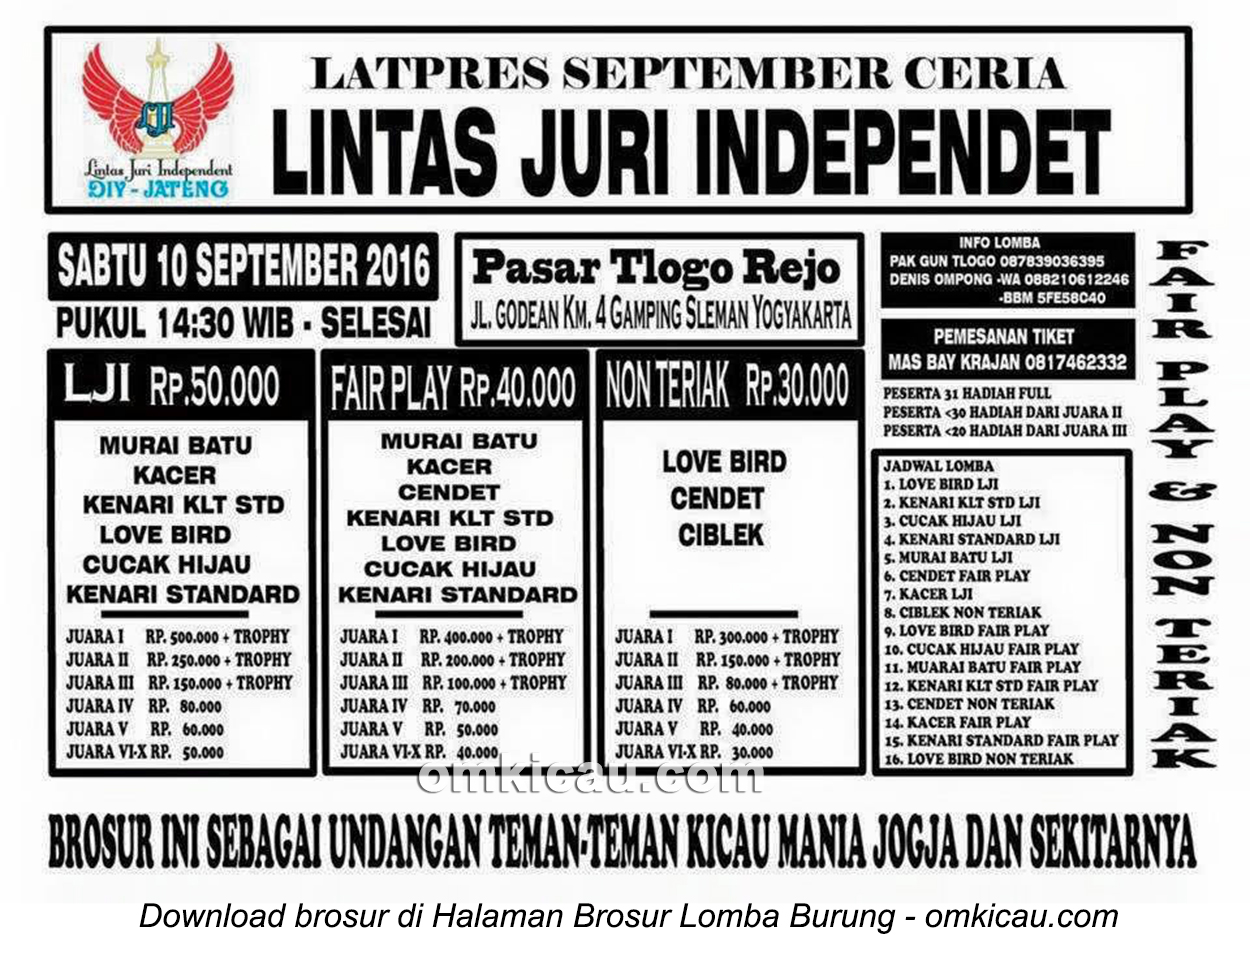 Brosur Latpres September Ceria Lintas Juri Independen, Jogja, 10 September 2016